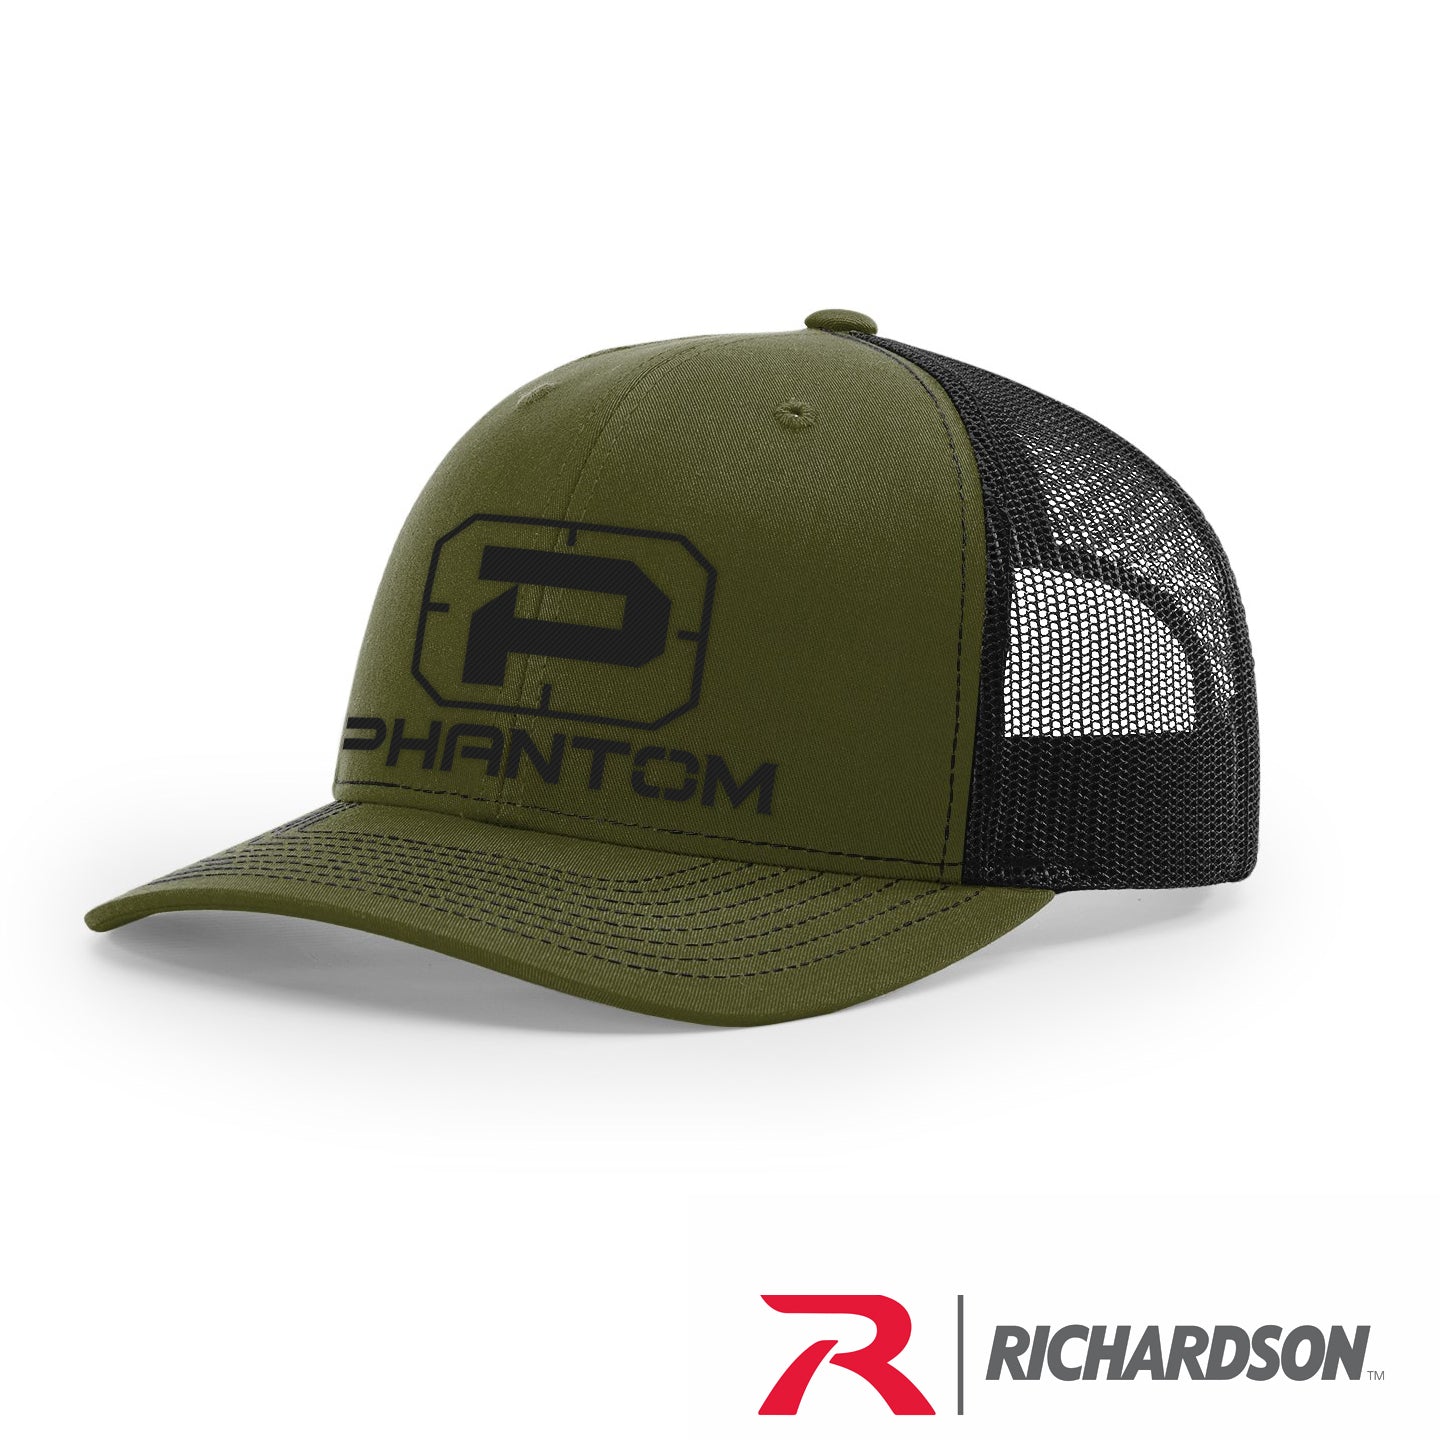 PHANTOM HUNTING RICHARDSON STRUCTURED TRUCKER HATS